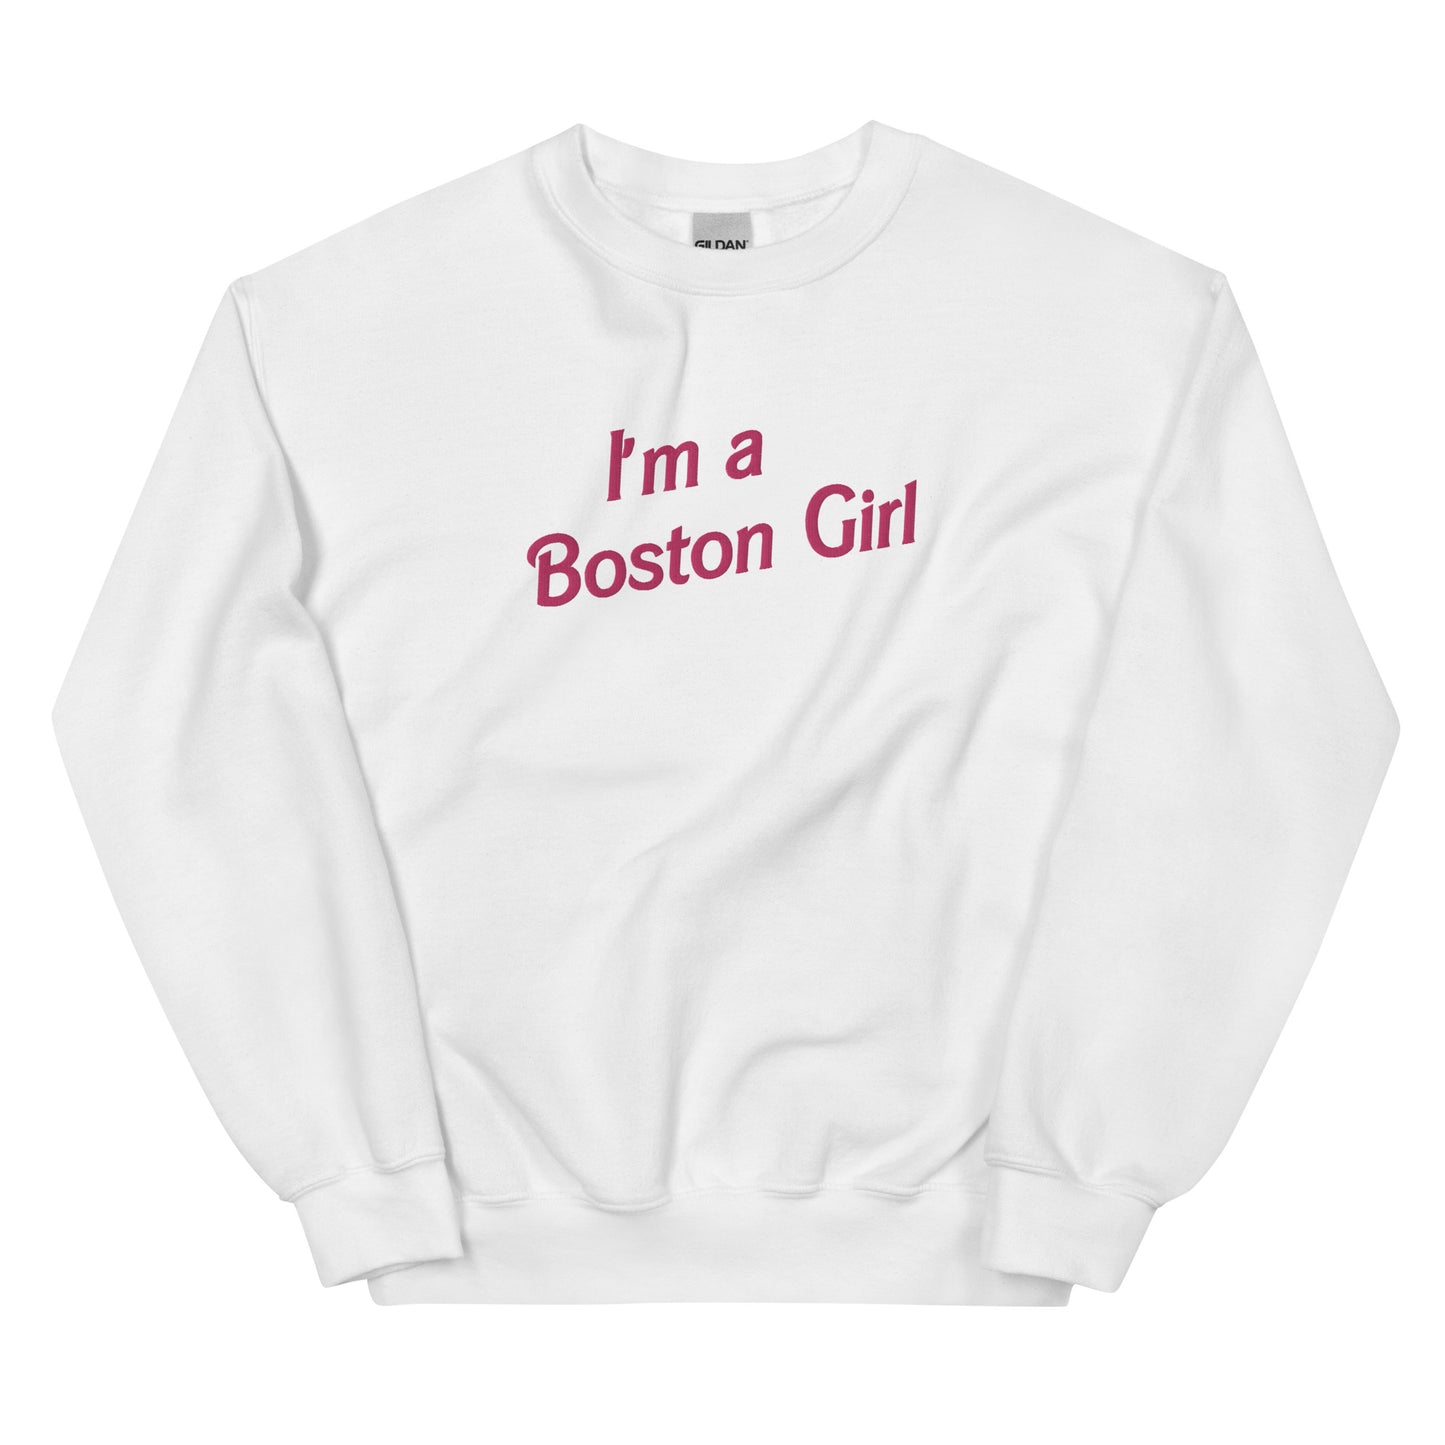 I'm a Boston Girl Embroidered Crewneck